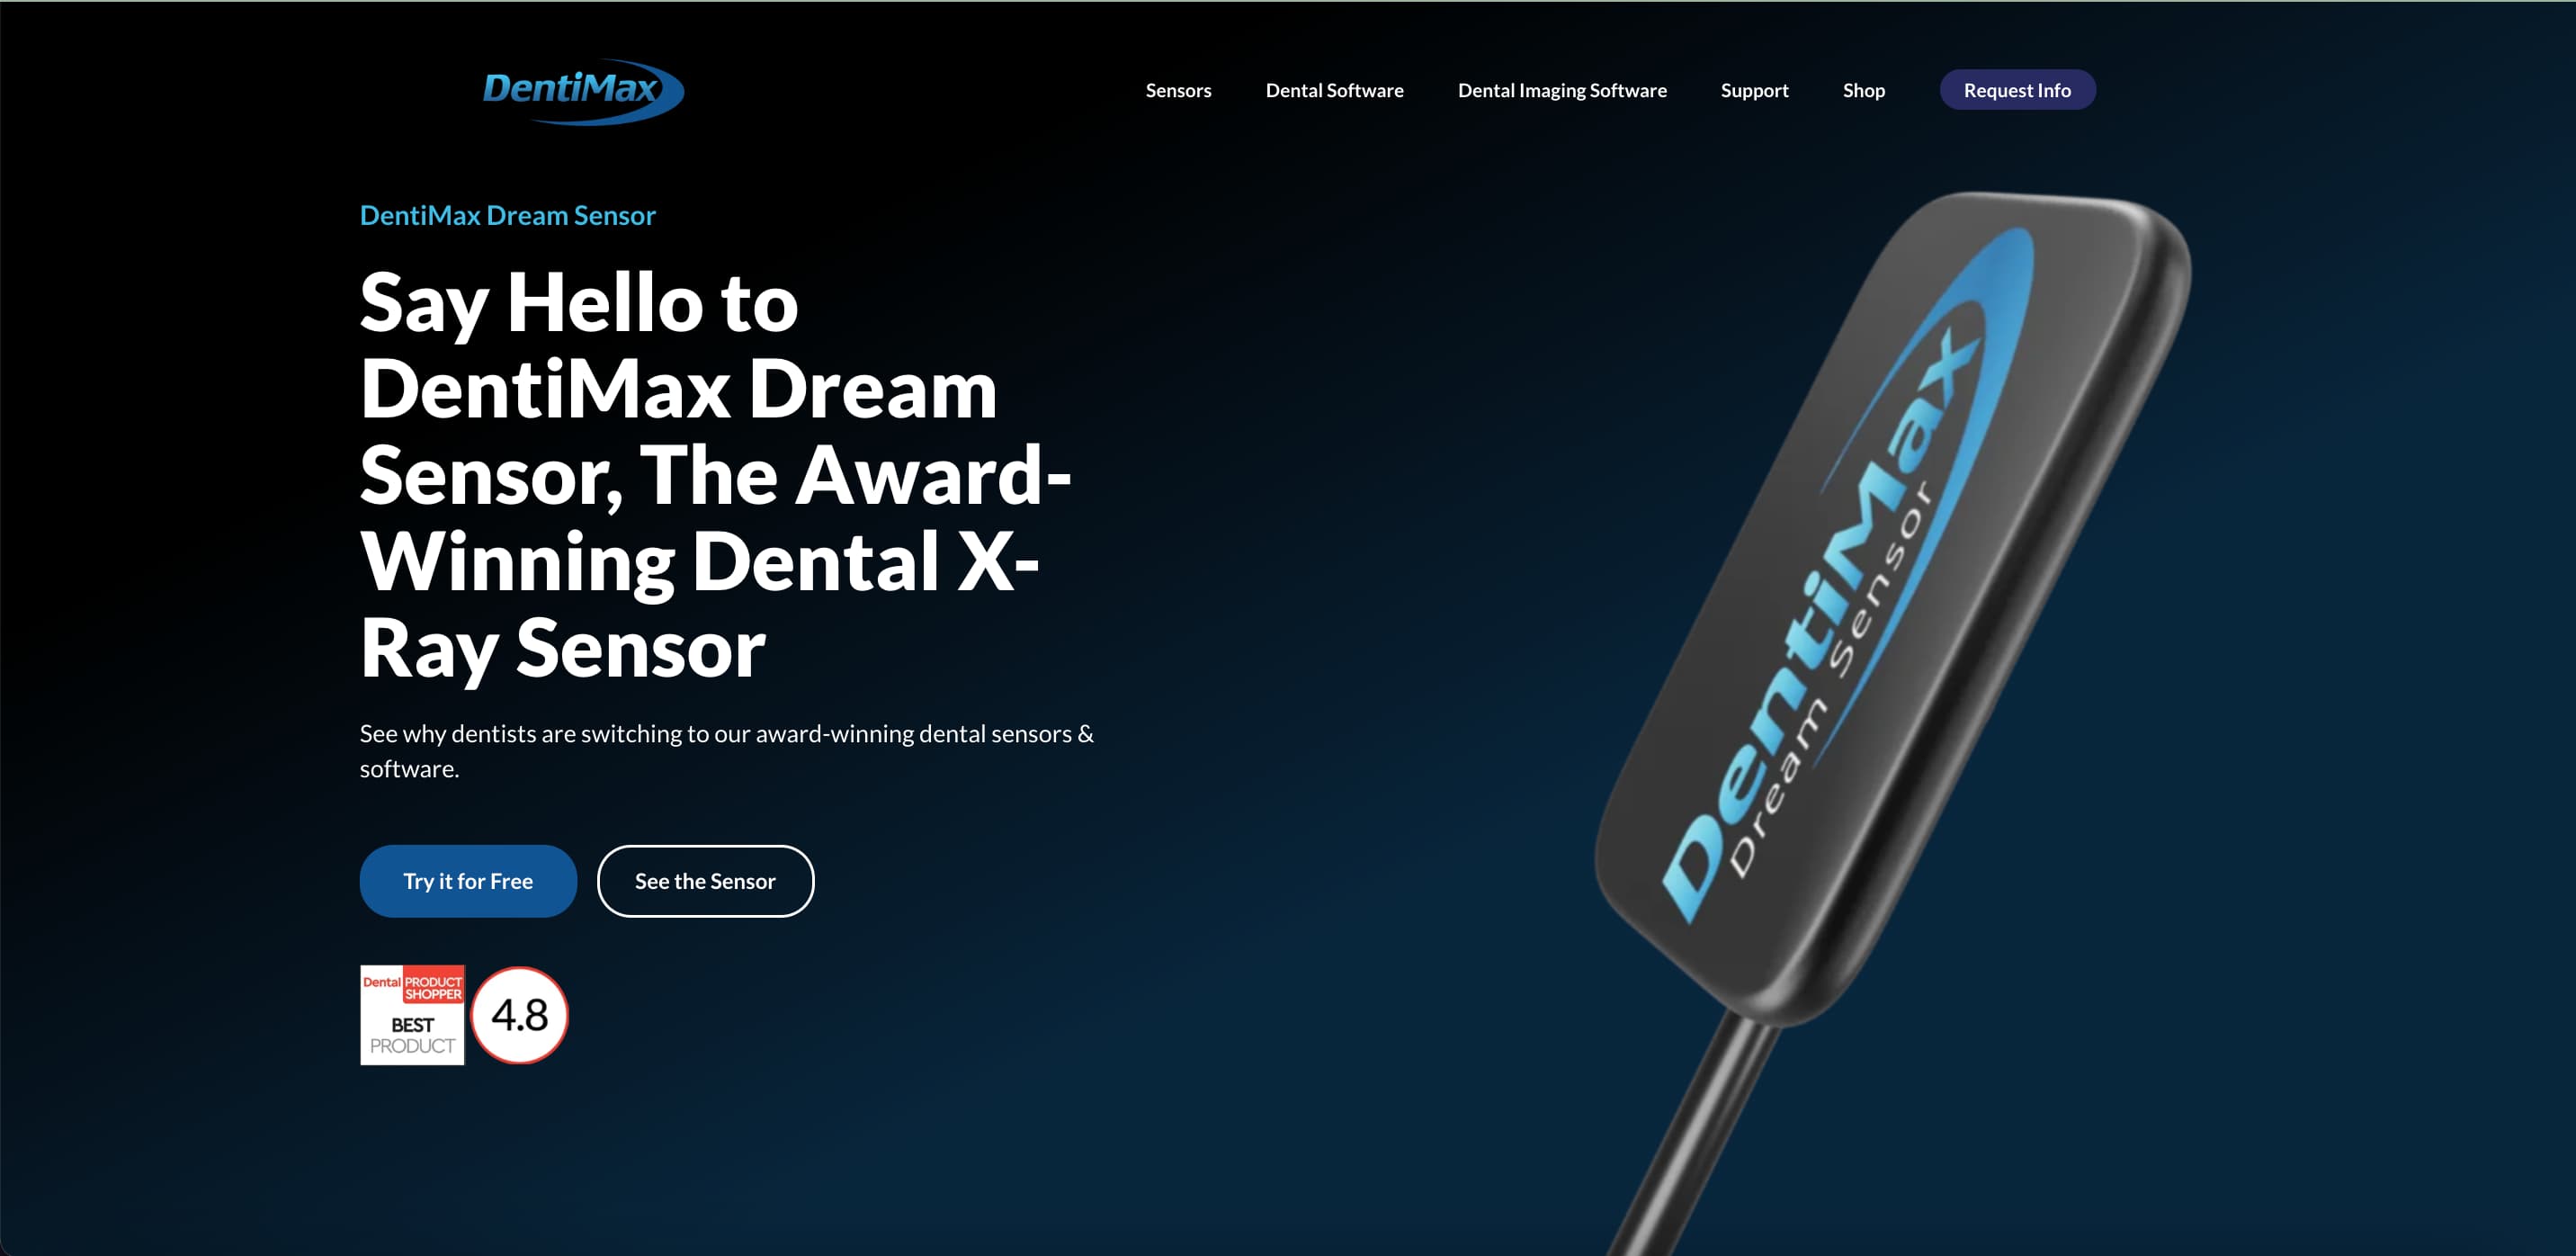 DentiMax Software for Dental Practice